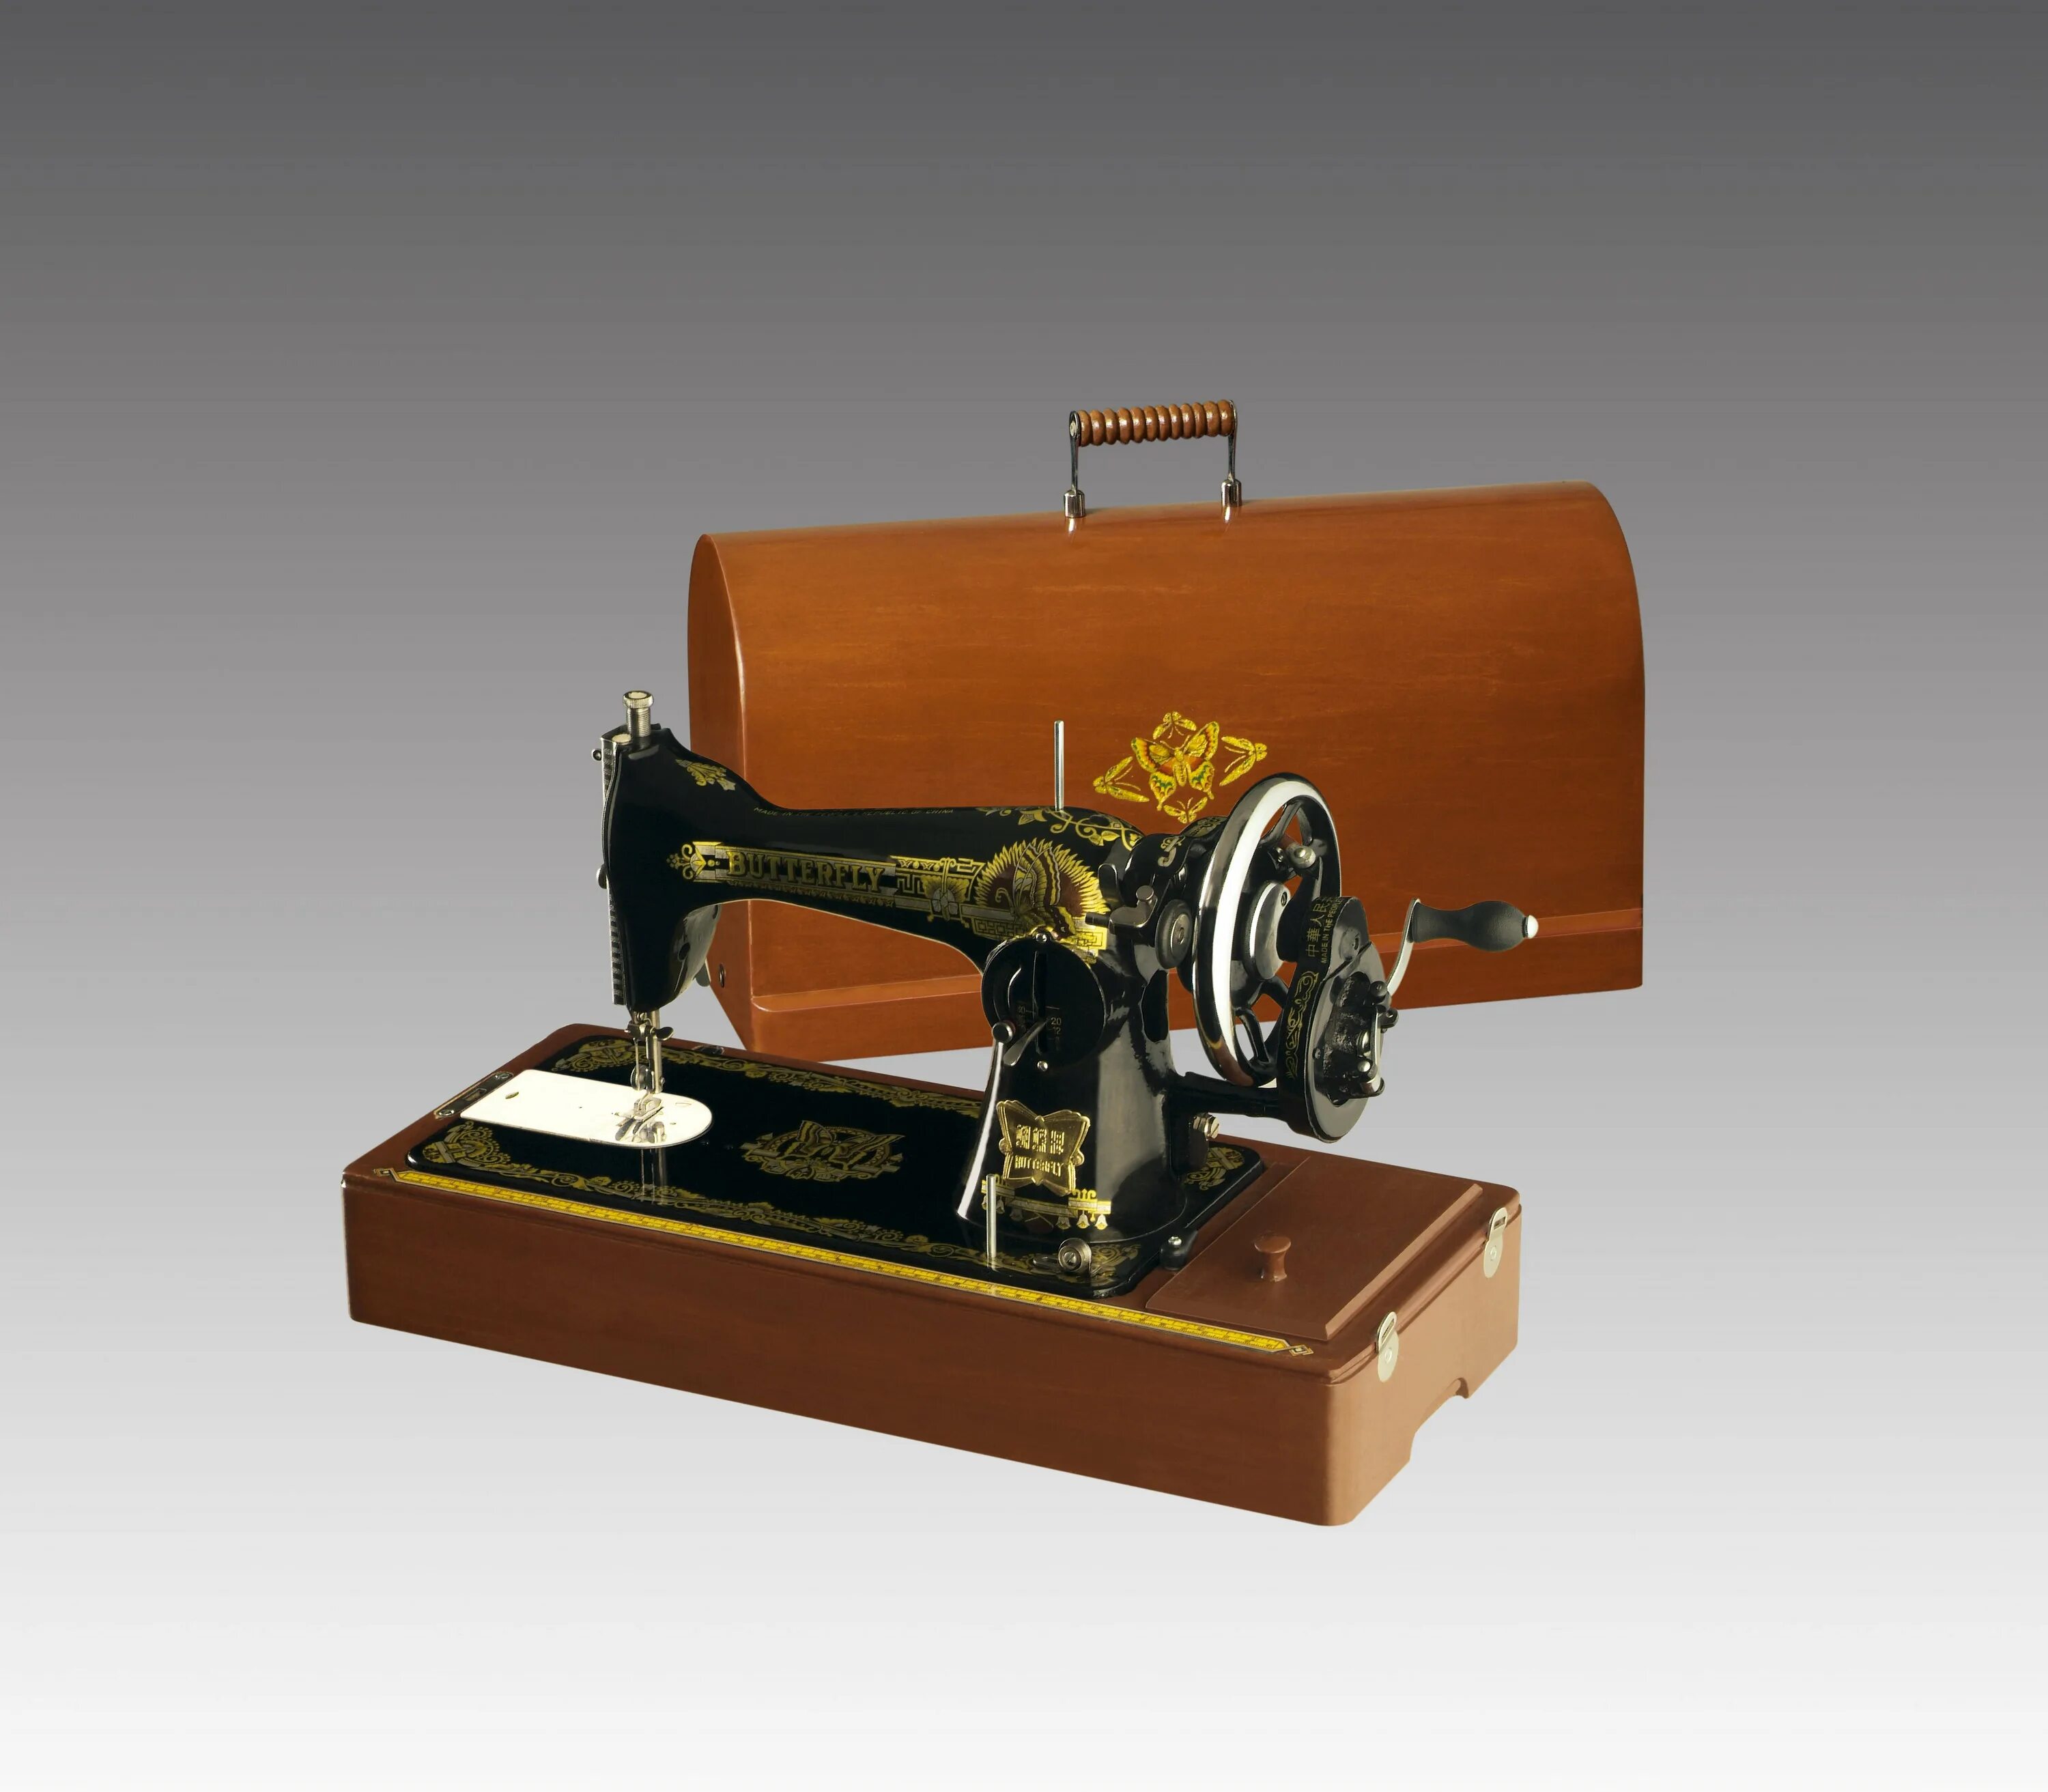 Швейная машинка karingbee. Швейная машинка Butterfly jg6001. Швейная машинка Butterfly 1958г. Китайская швейная машинка Баттерфляй. Баттерфляй швейная машинка 1956.